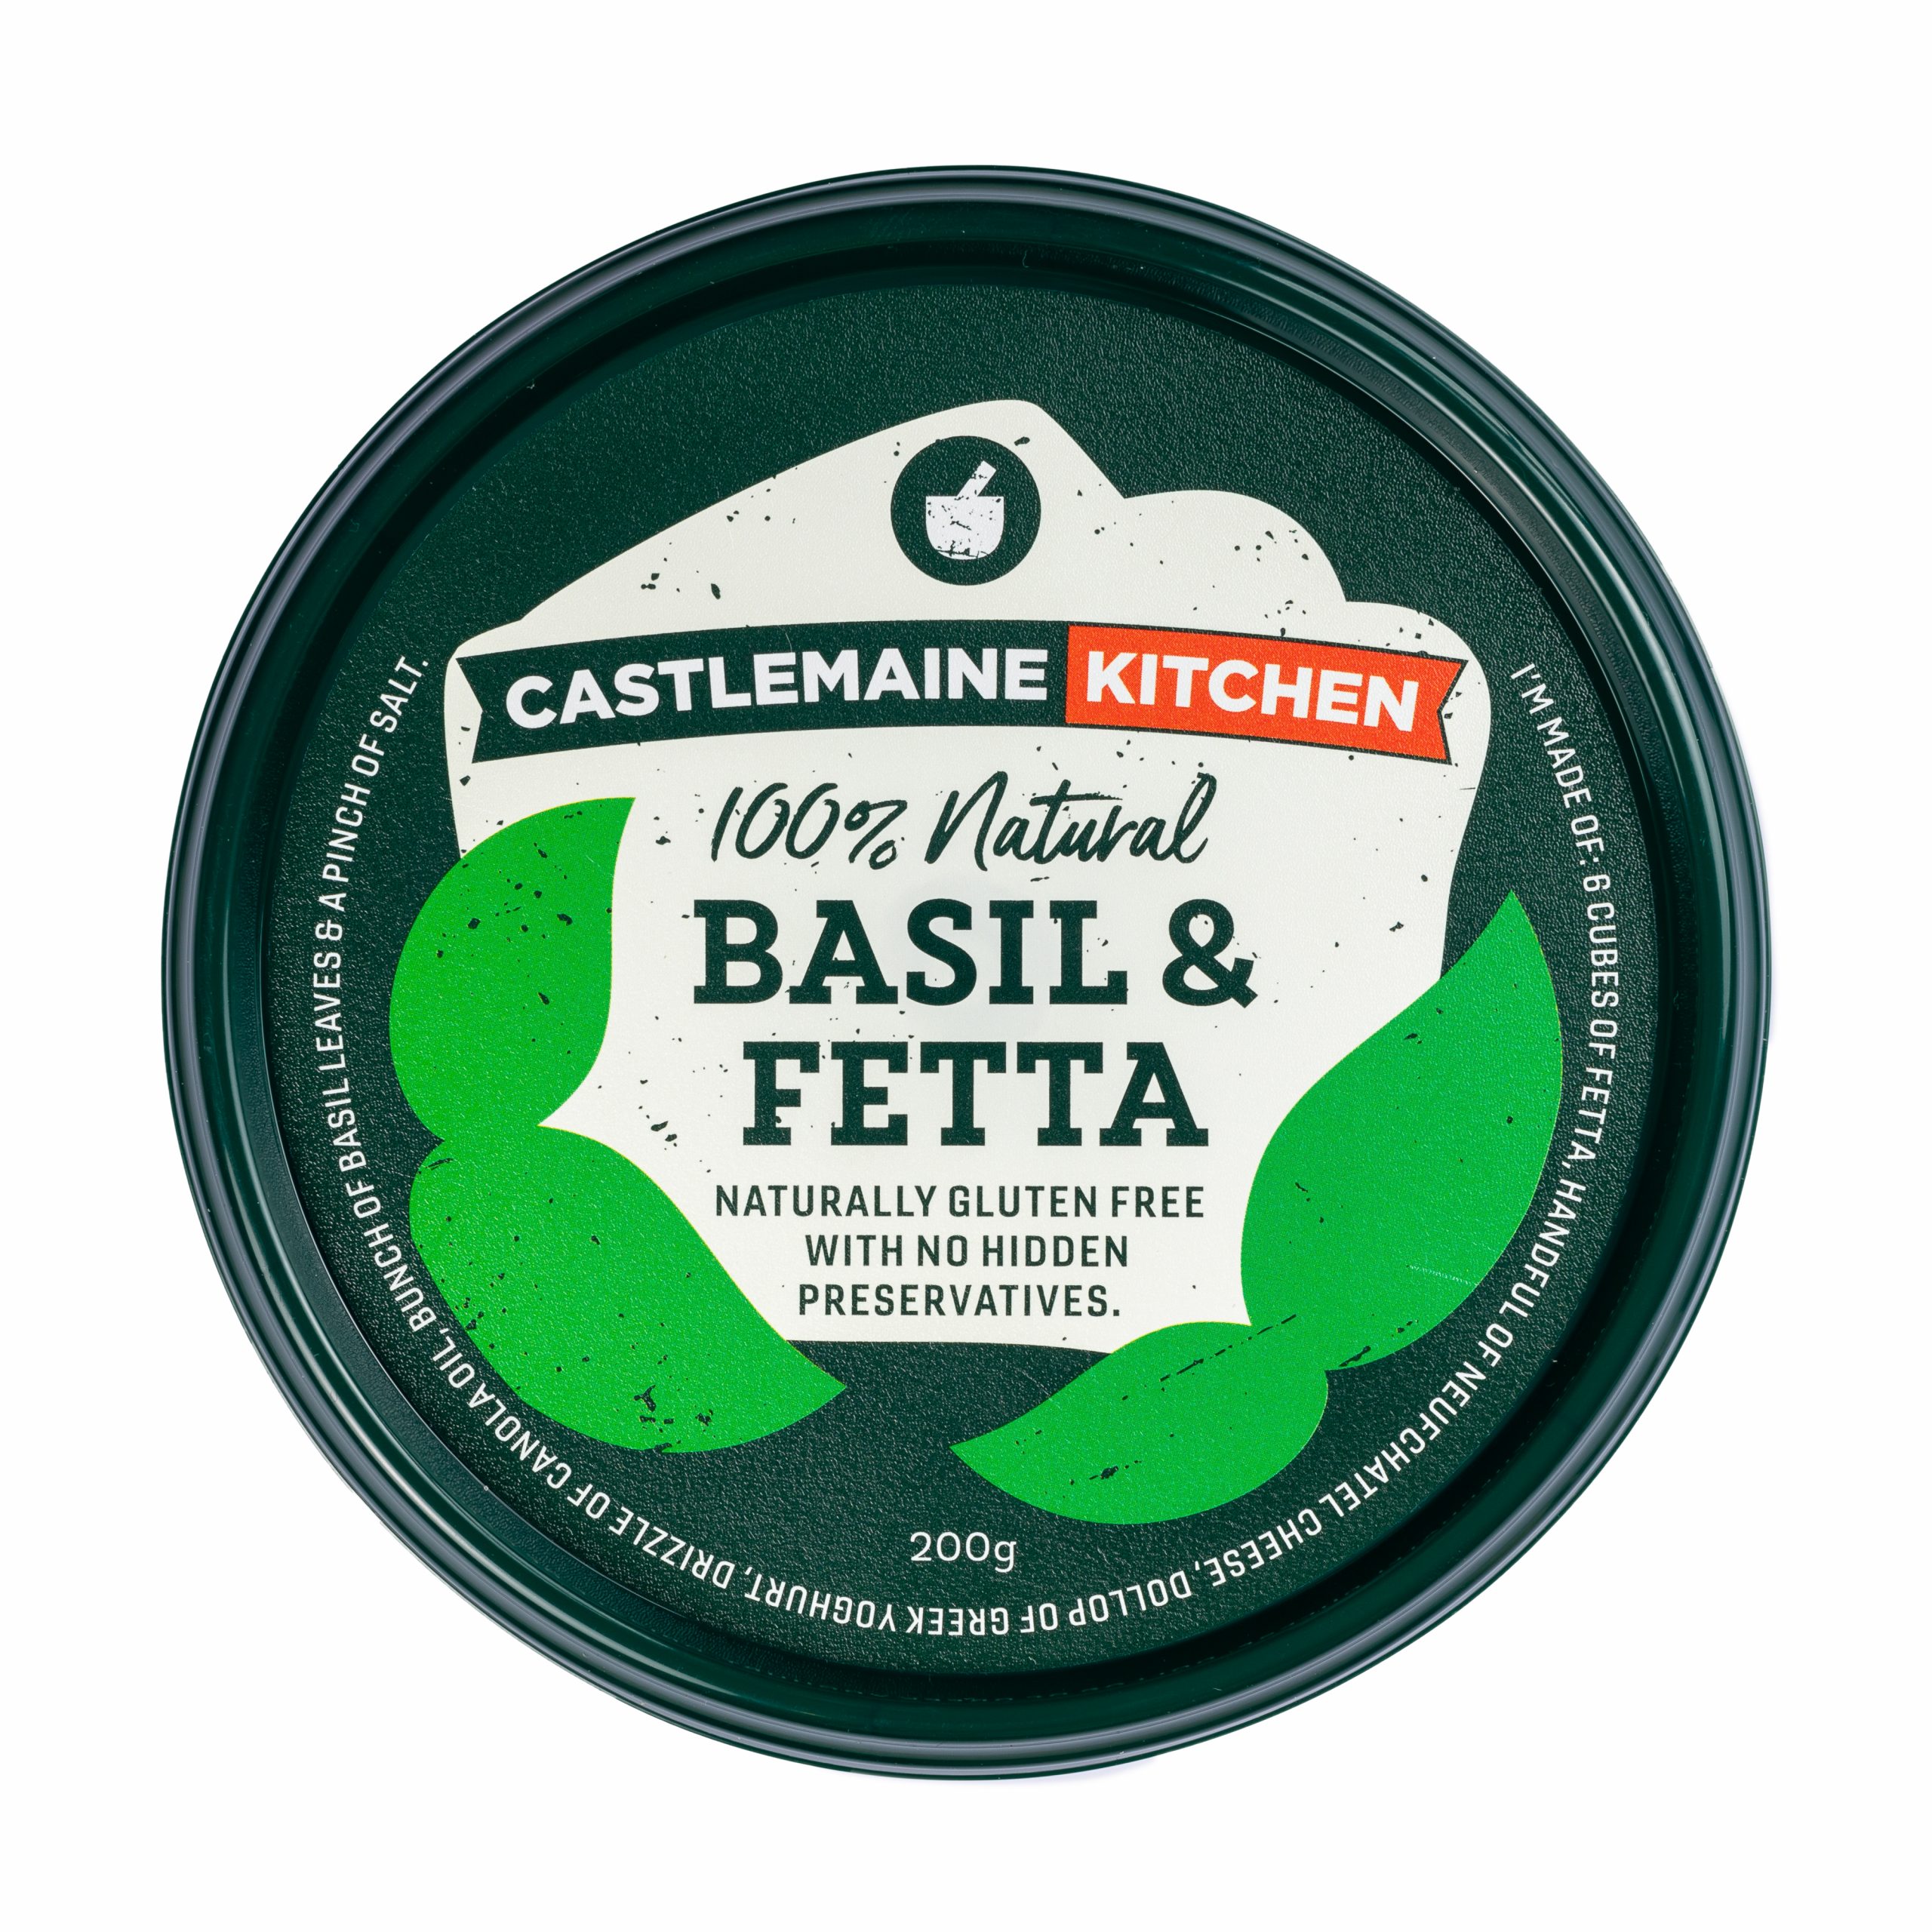 Castlemaine Kitchen Basil & Fetta